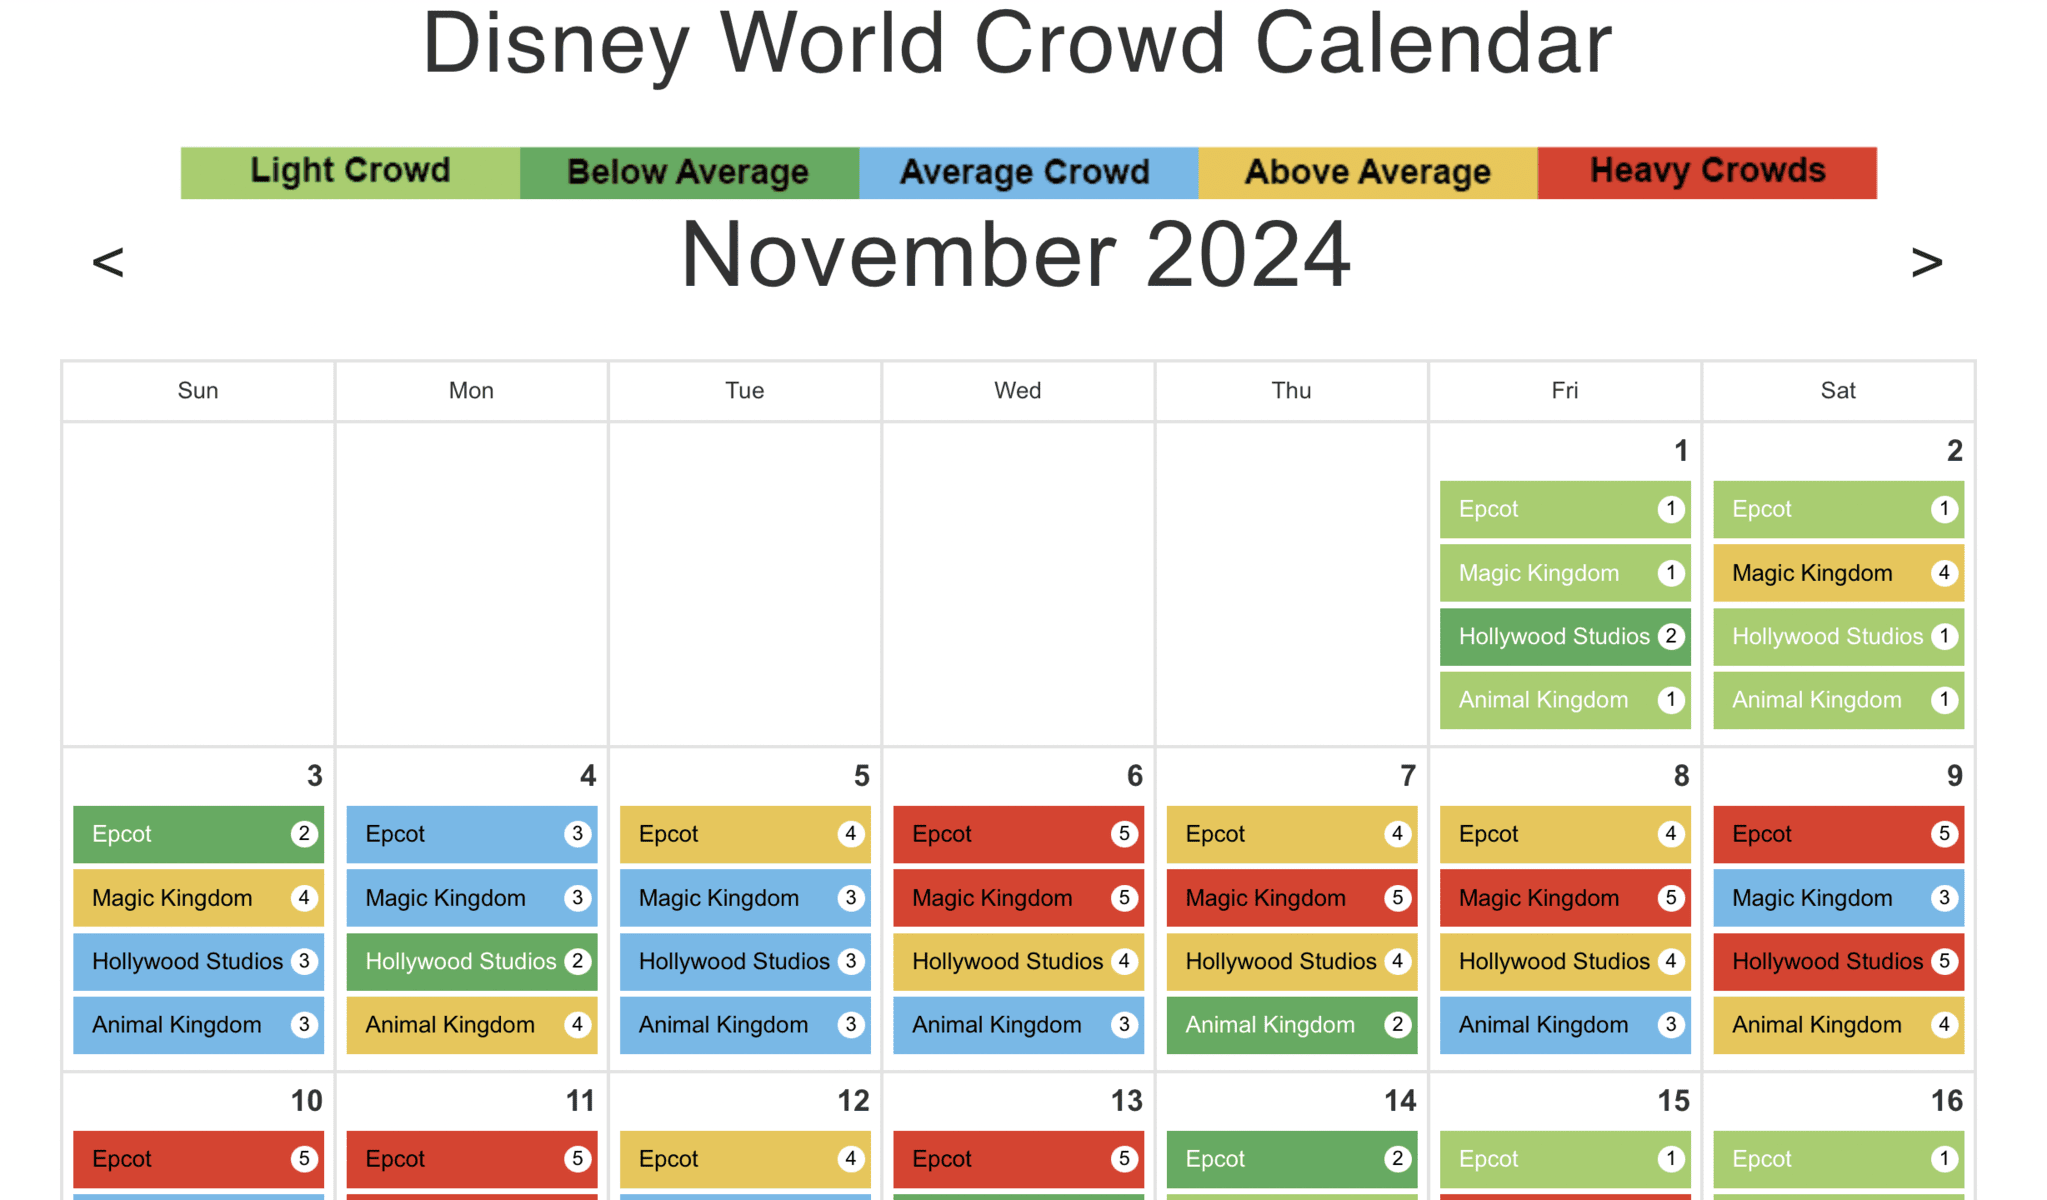 Disney World Crowd Levels in each park